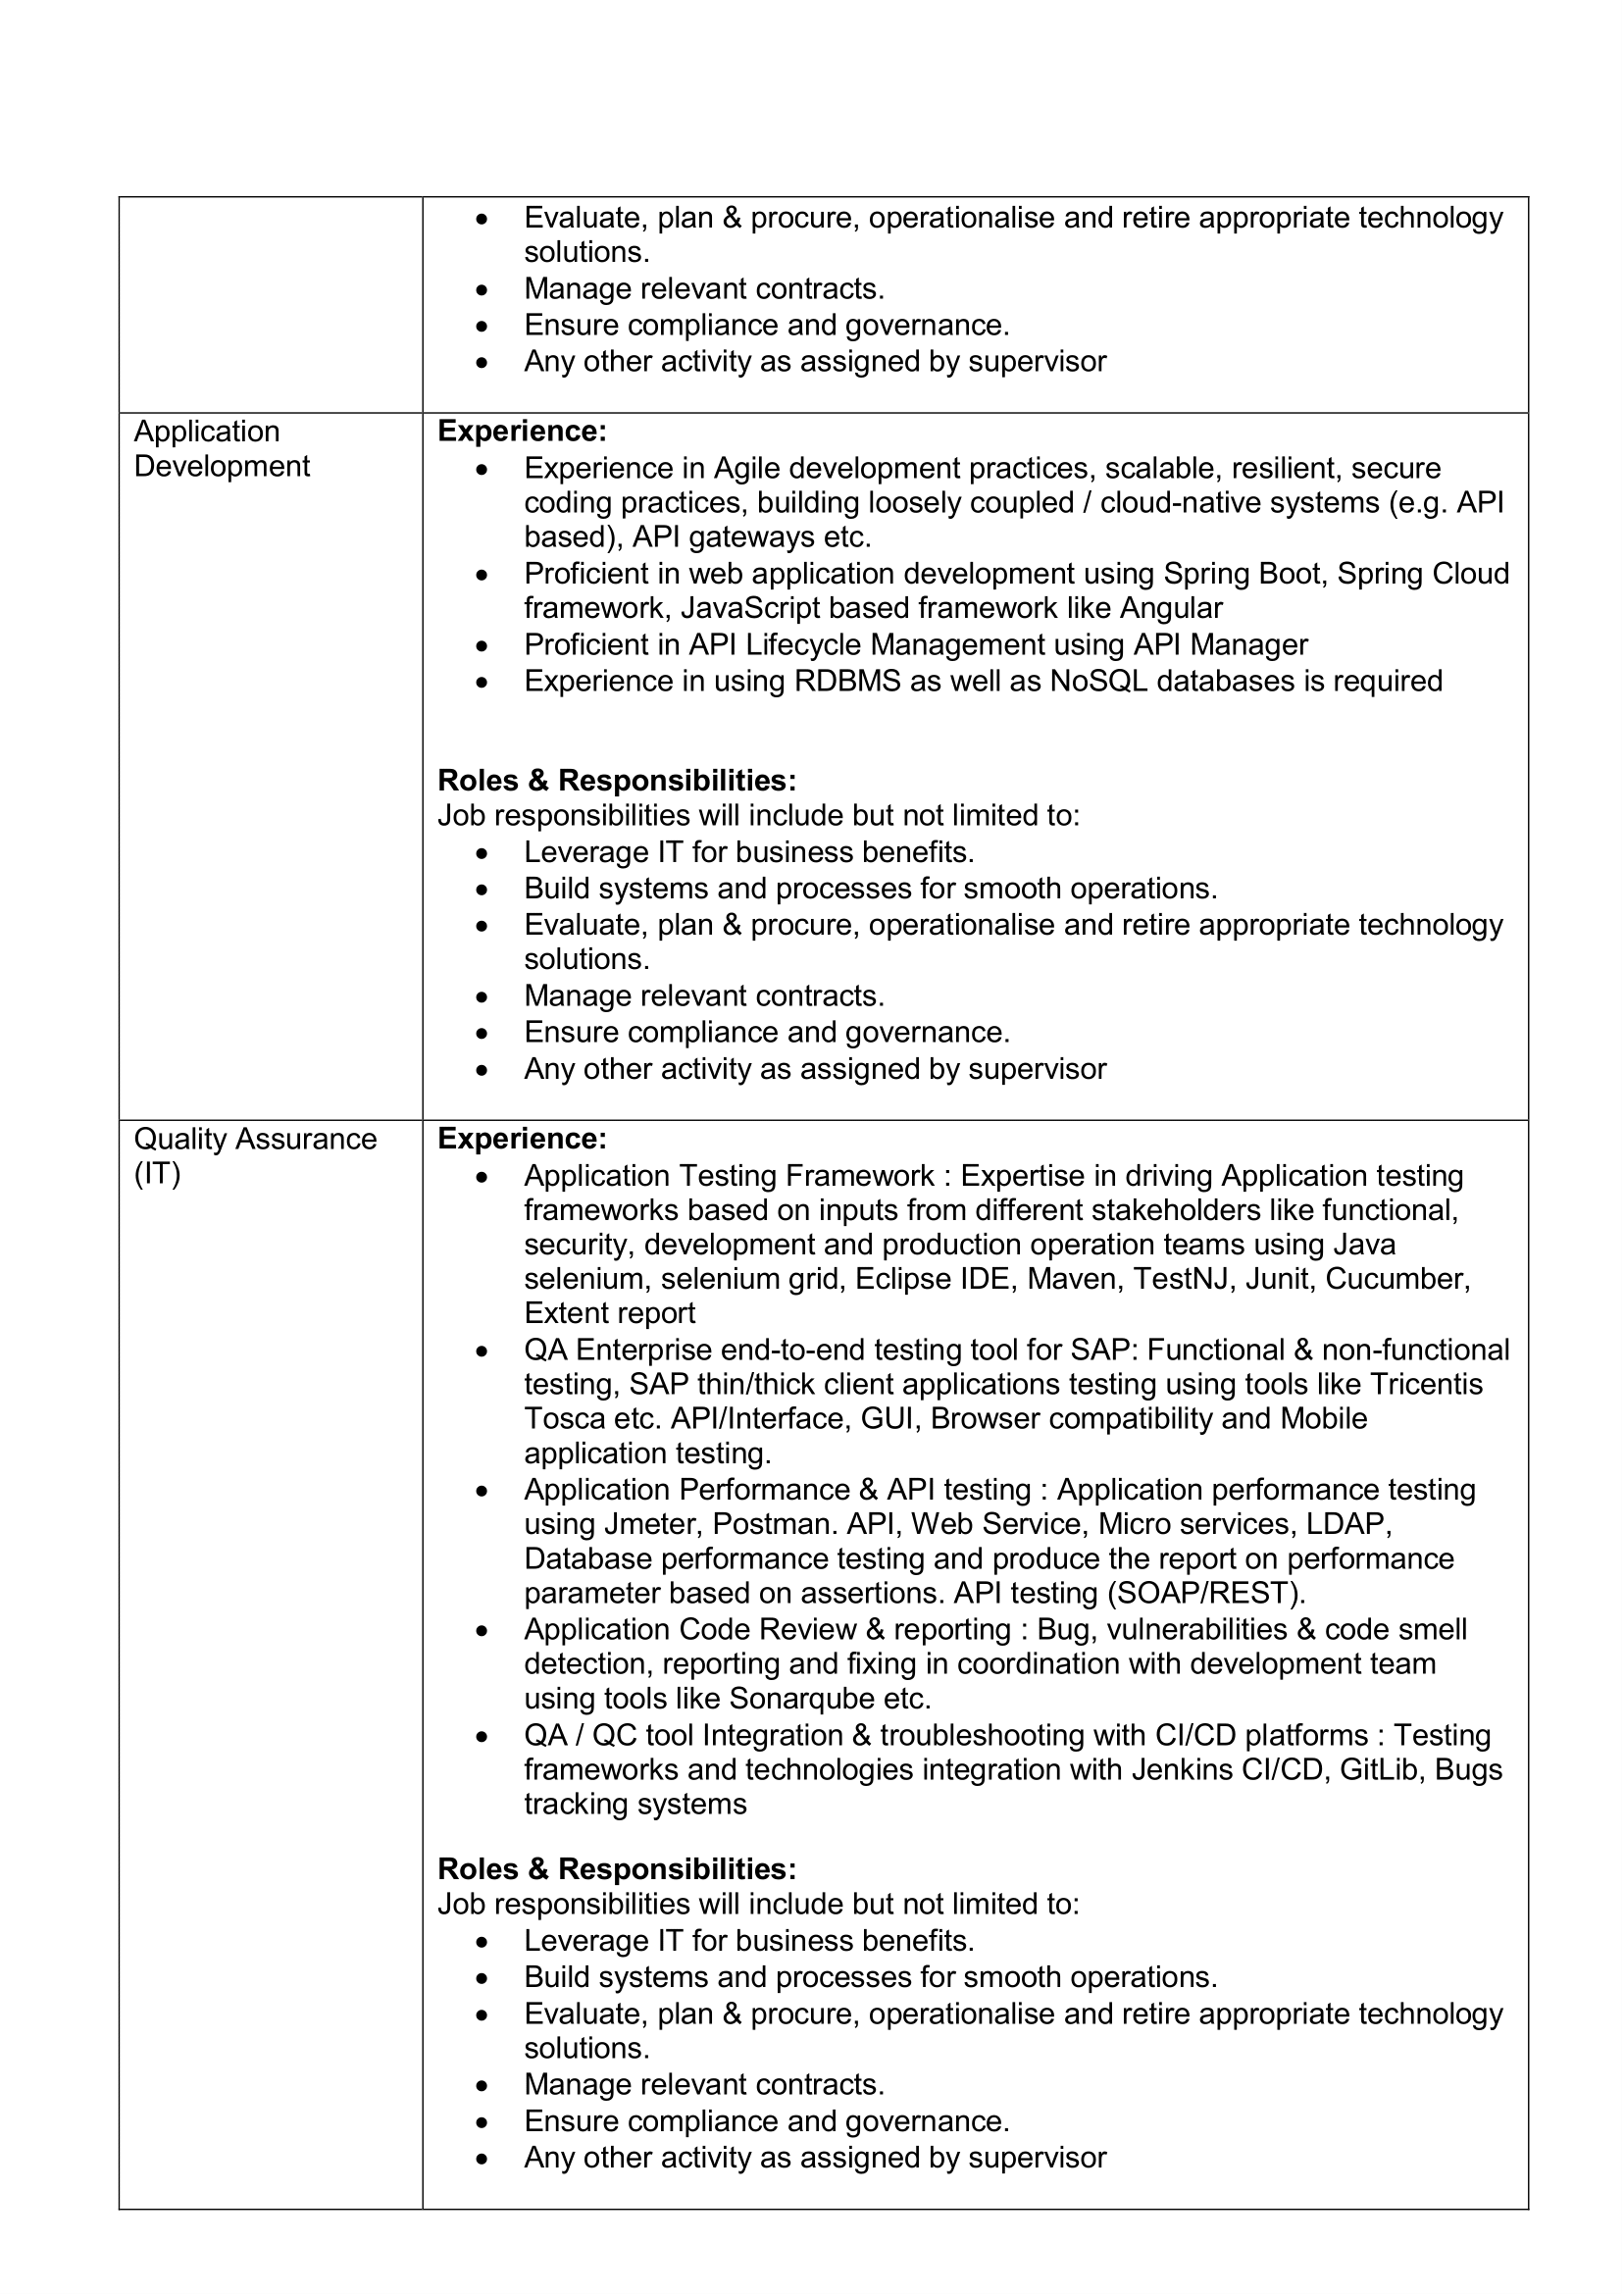 HPCL Recruitment 2023